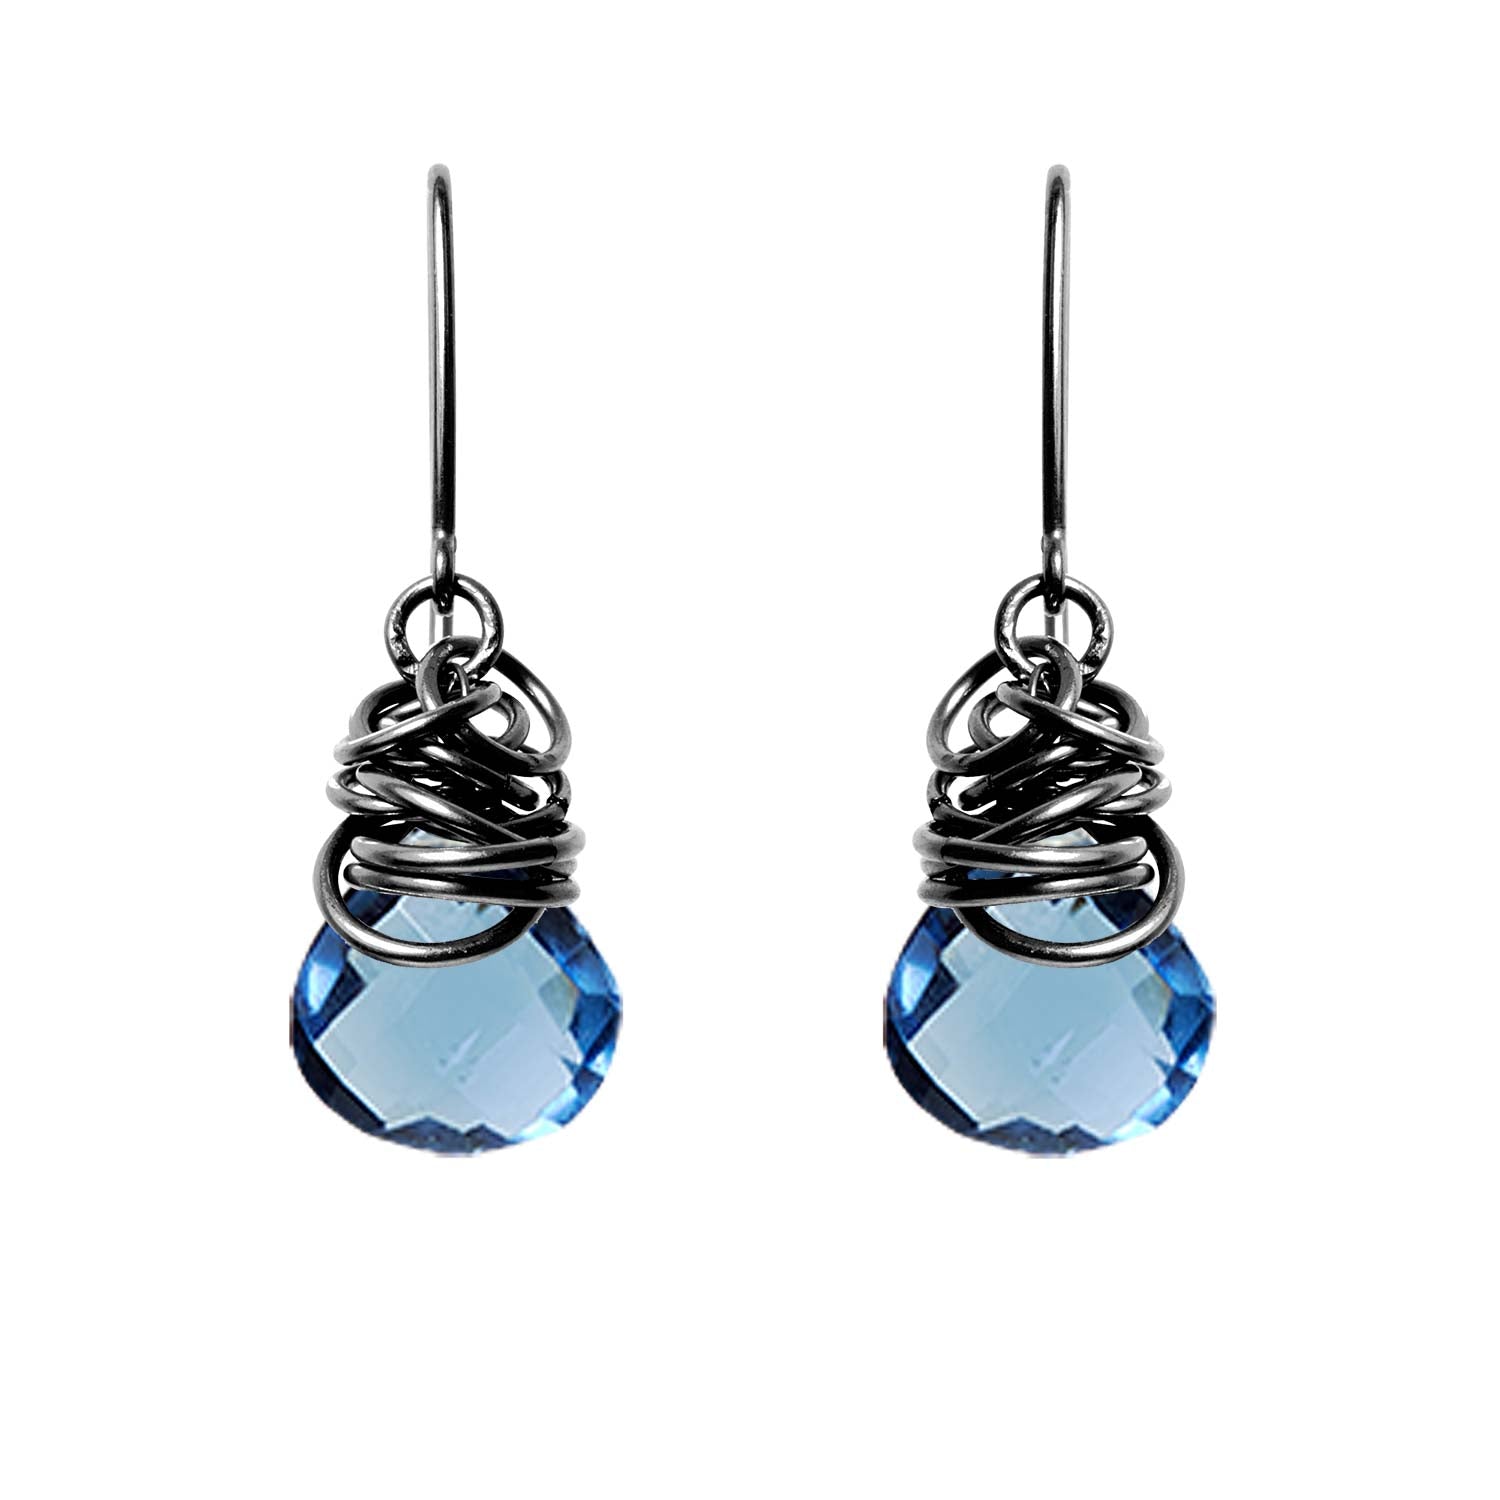 Oxidized Sterling Silver London Blue Topaz earrings, Oxidized Sterling Silver London Blue Topaz gemstone earrings, Oxidized Sterling Silver London Blue Topaz birthstone earrings